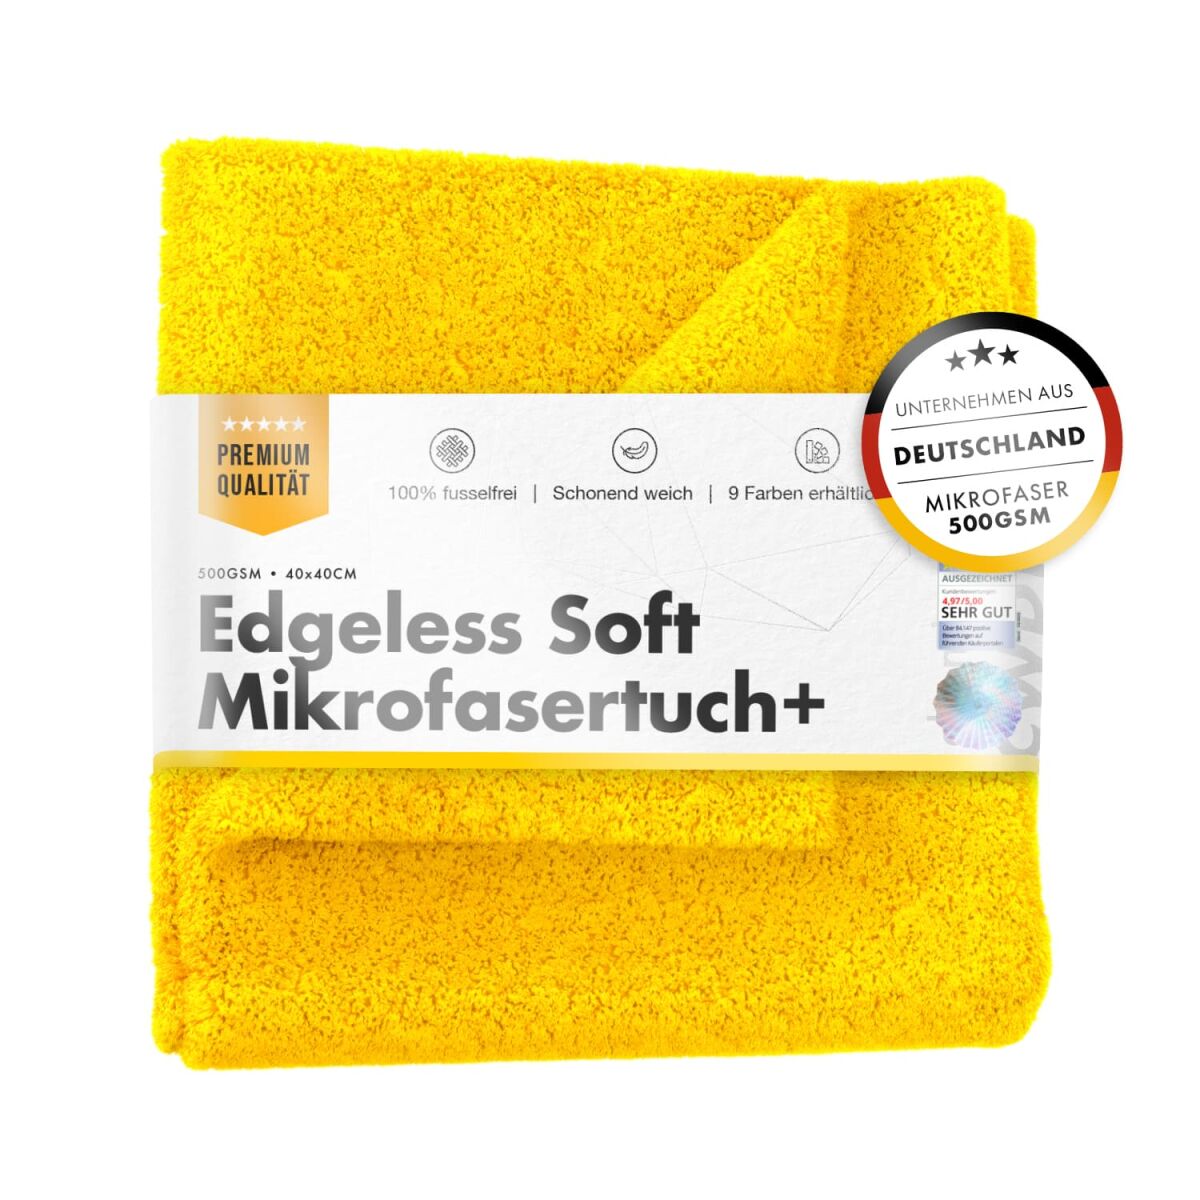 Chemicalworkz Edgeless Soft Touch Towel 500GSM Gelb Poliertuch 40×40 Zentimeter